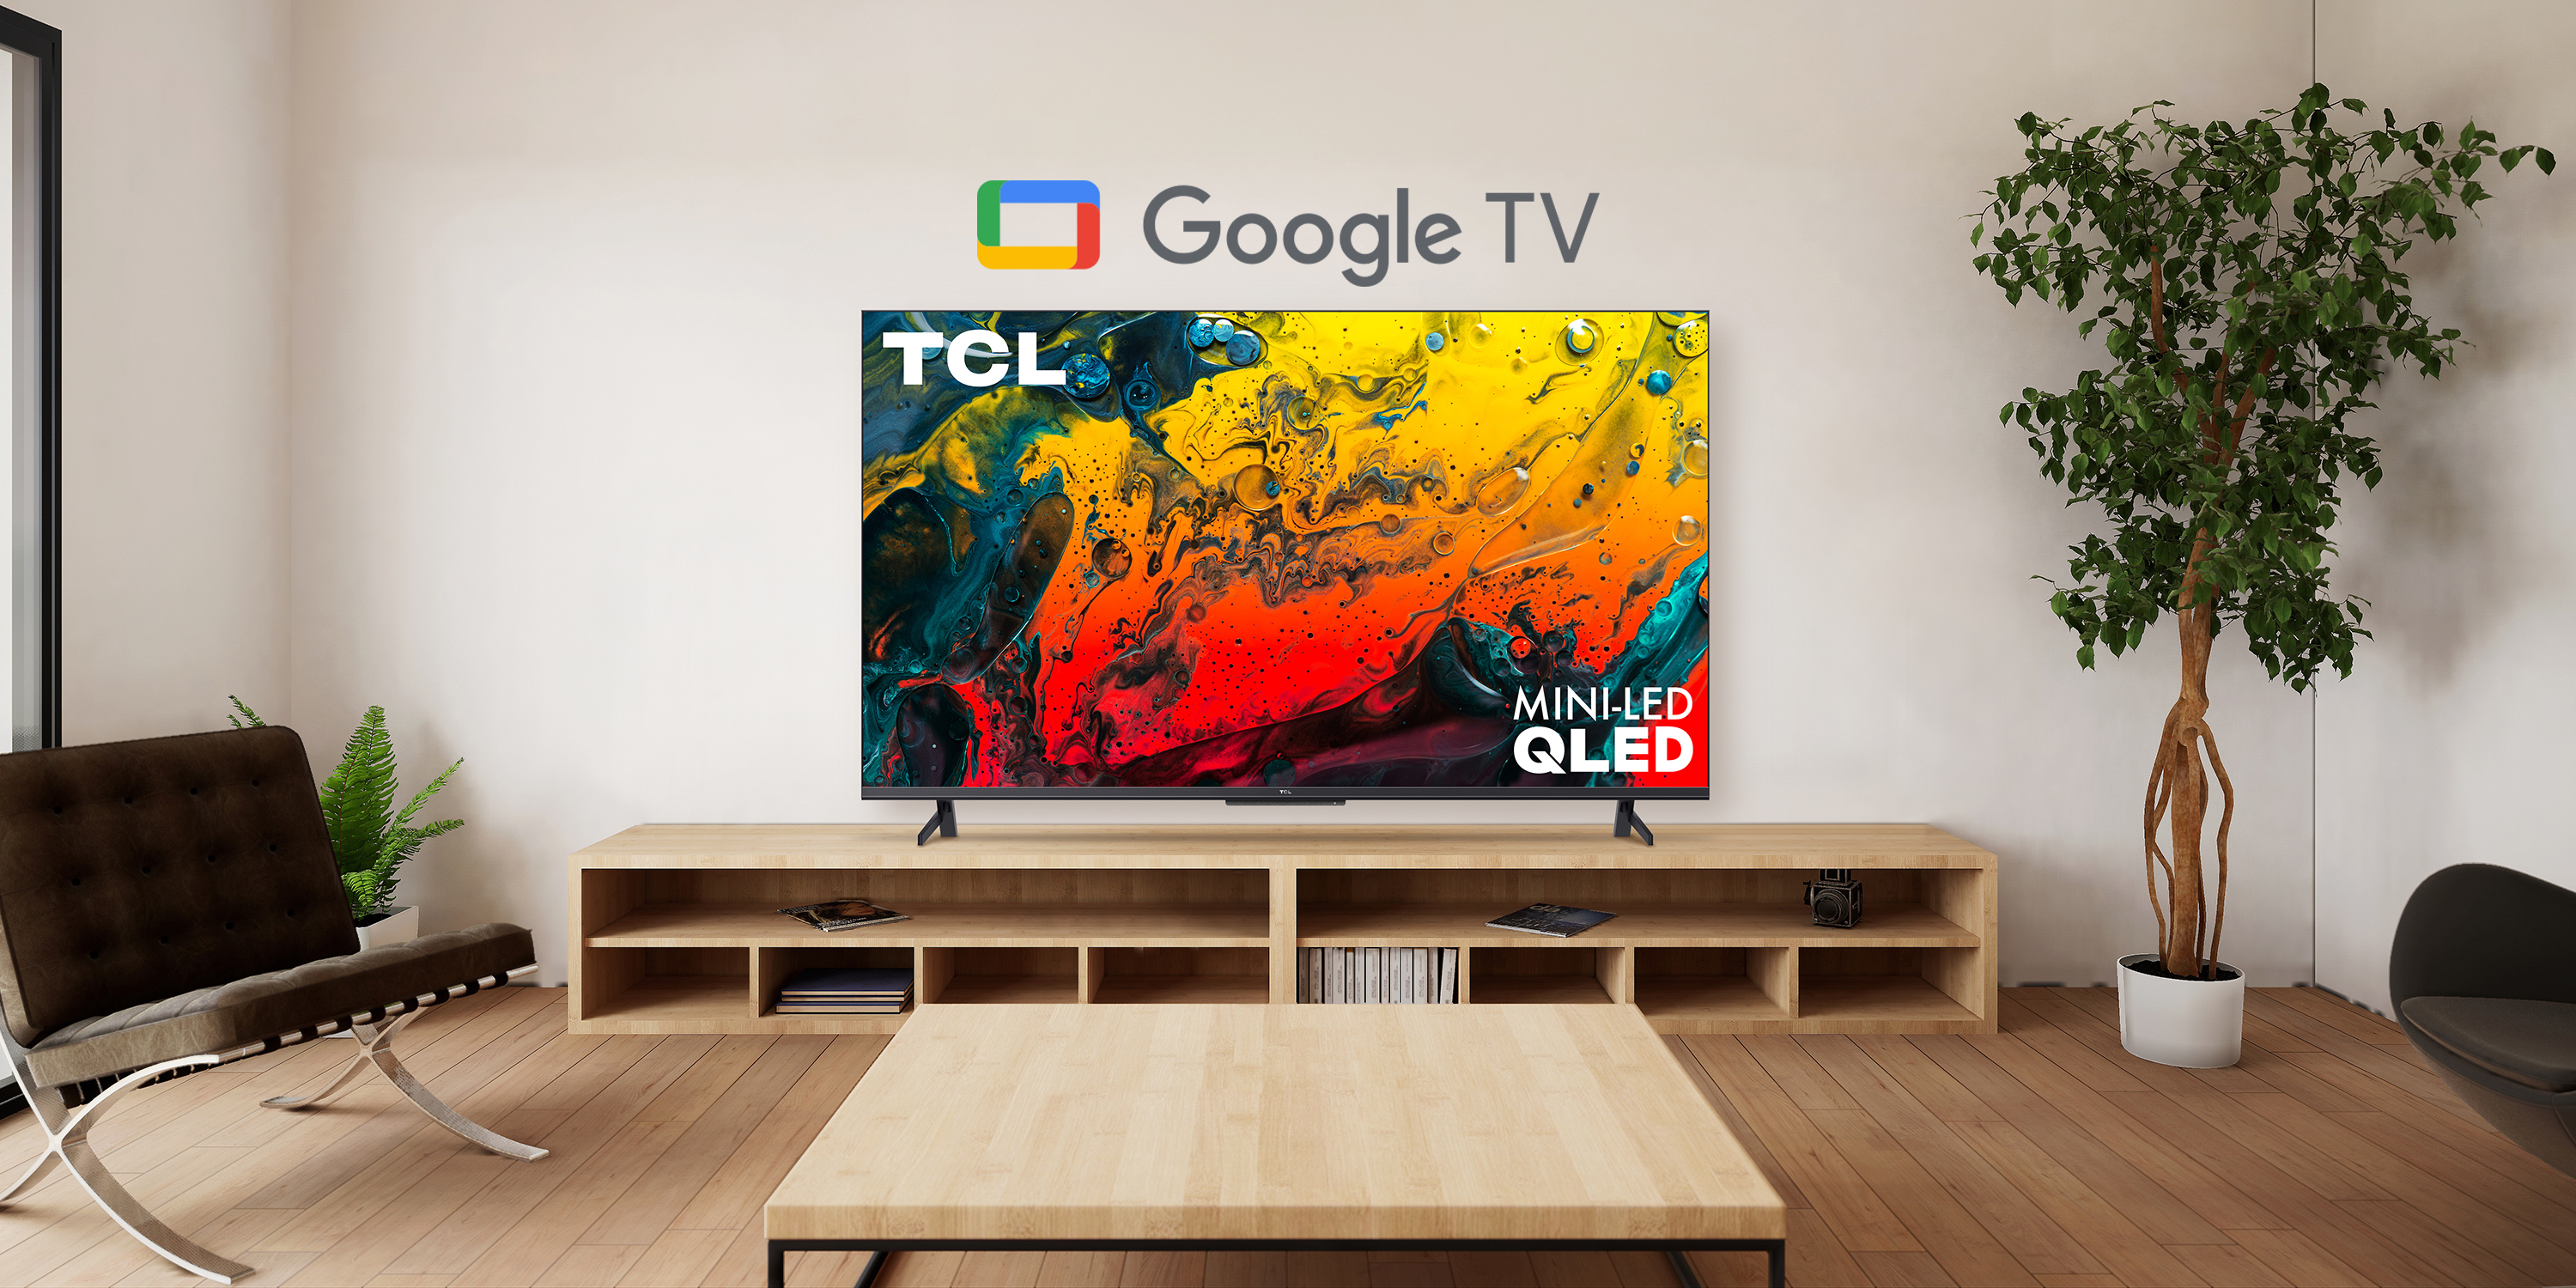 Tcl телевизор голосовой помощник. TCL 6-Series. Google TV телевизор. Телевизор TCL Google TV.